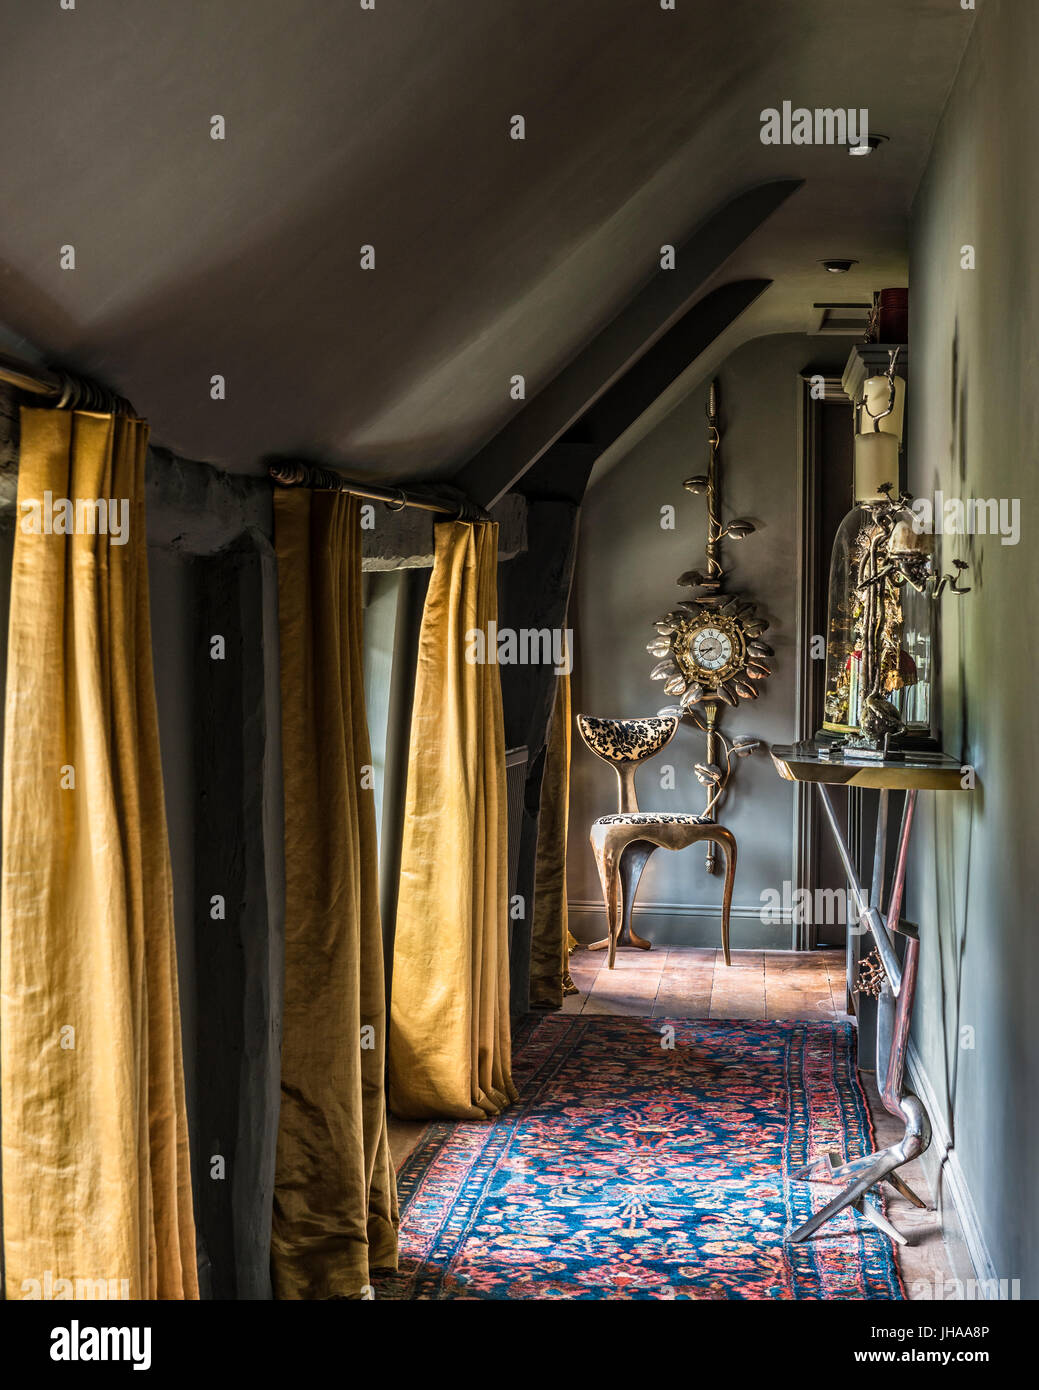 Corridoio con tende gialle e modellato rug Foto stock - Alamy